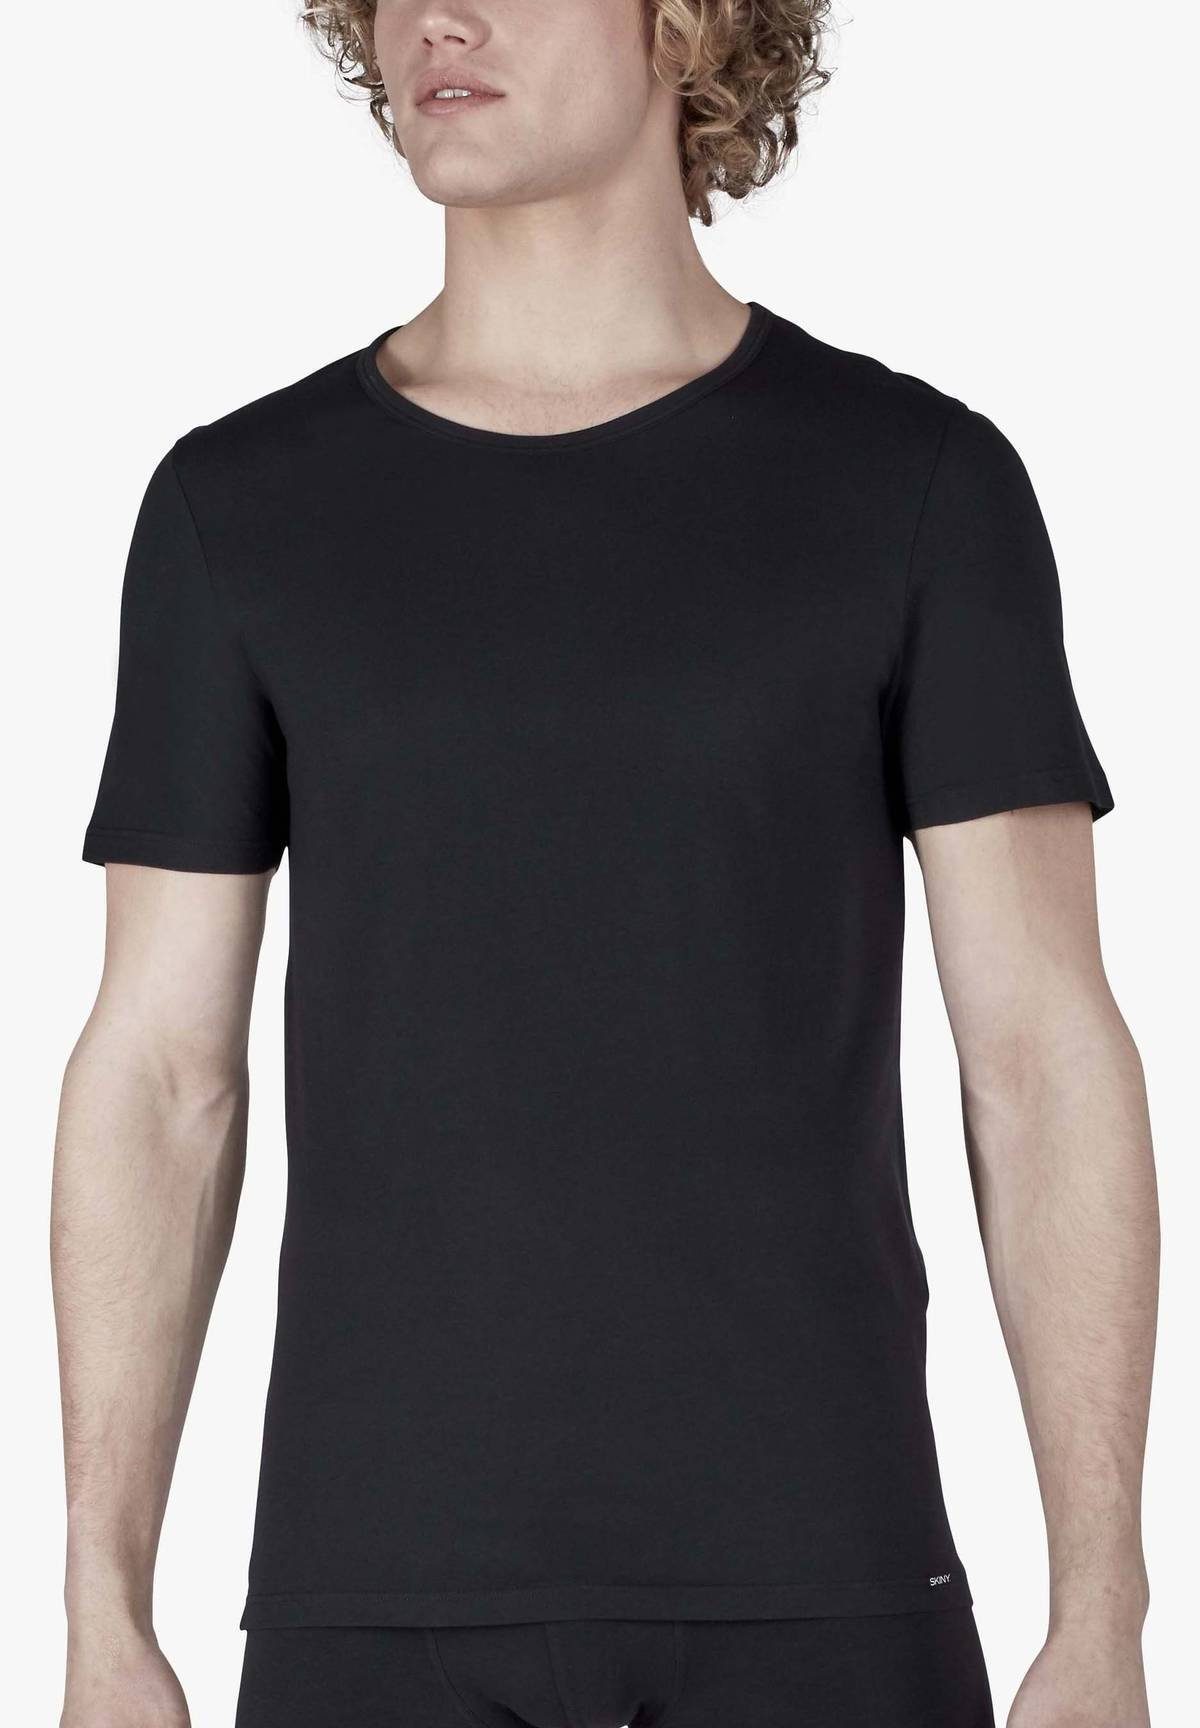 Skiny Unterhemd Herren T-Shirt, Pack 2er Schwarz Unterhemd, - Halbarm